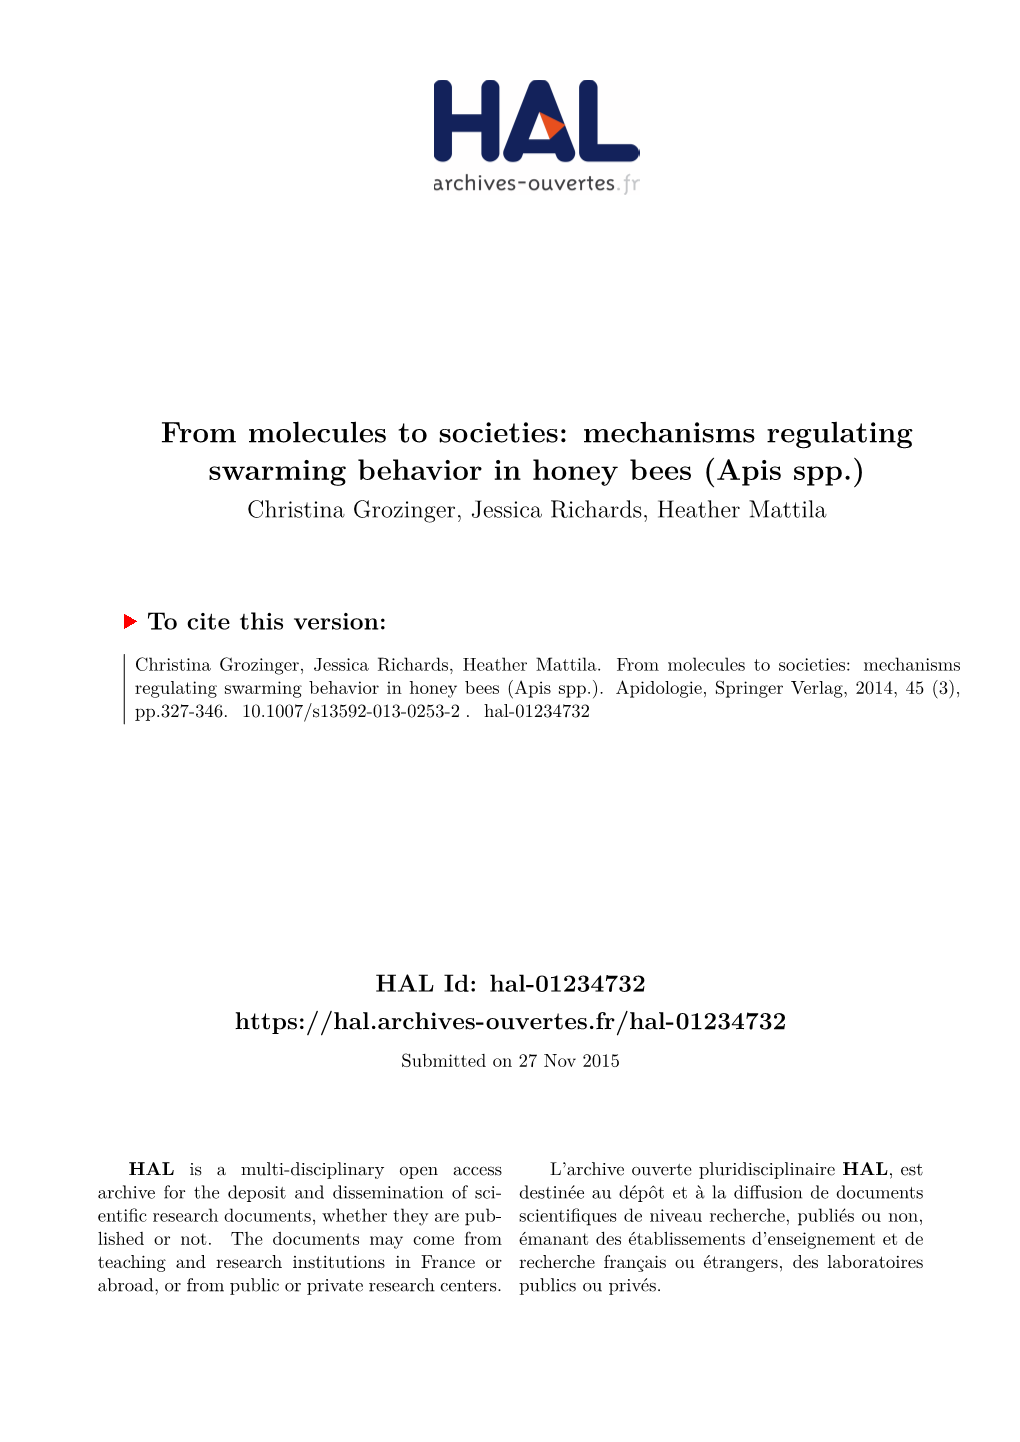 Mechanisms Regulating Swarming Behavior in Honey Bees (Apis Spp.) Christina Grozinger, Jessica Richards, Heather Mattila